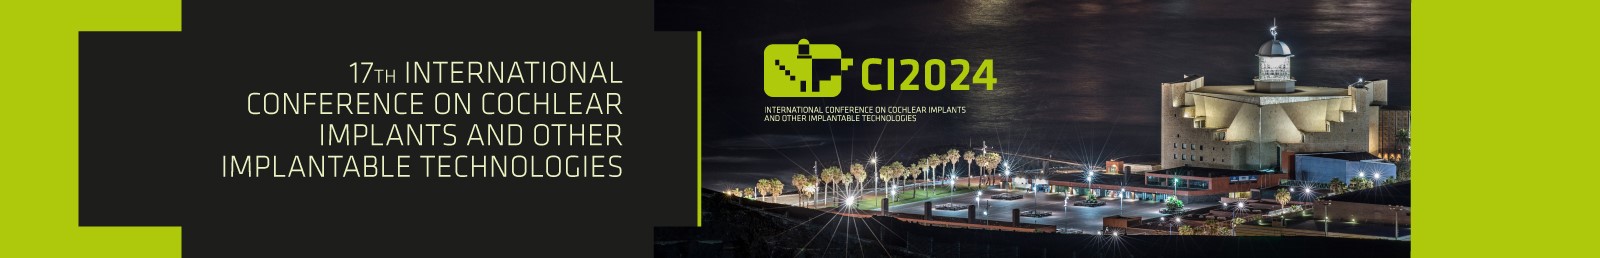 CI 2024: 17th INTERNATIONAL CONFERENCE ON CI